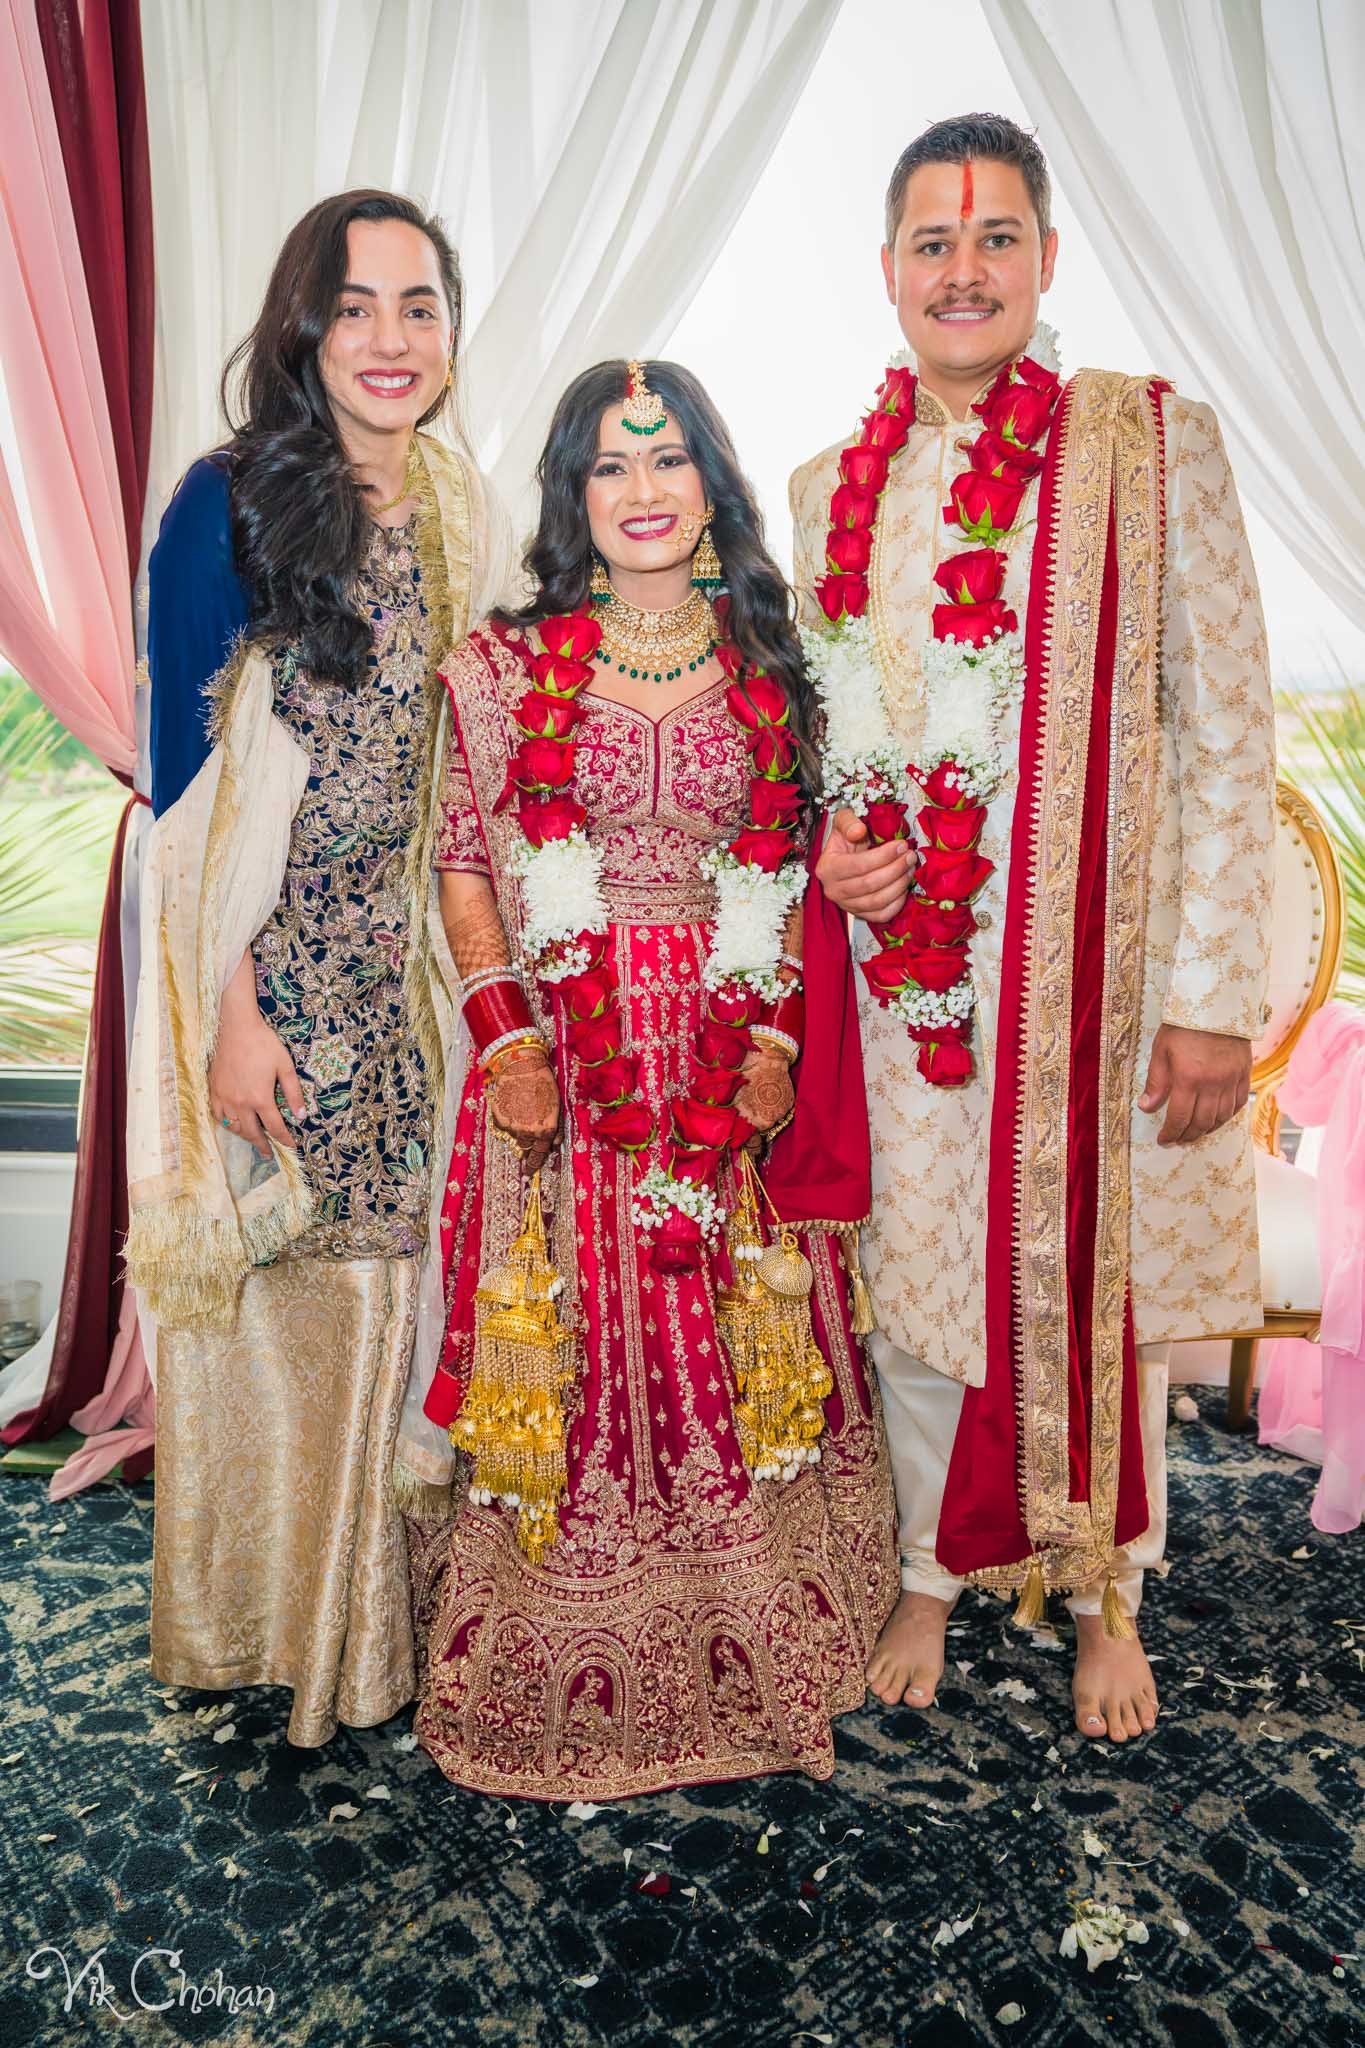 2022-06-09-Annie-&-Steven-Las-Vegas-Indian-Wedding-Ceremony-Photography-Vik-Chohan-Photography-Photo-Booth-Social-Media-VCP-214.jpg